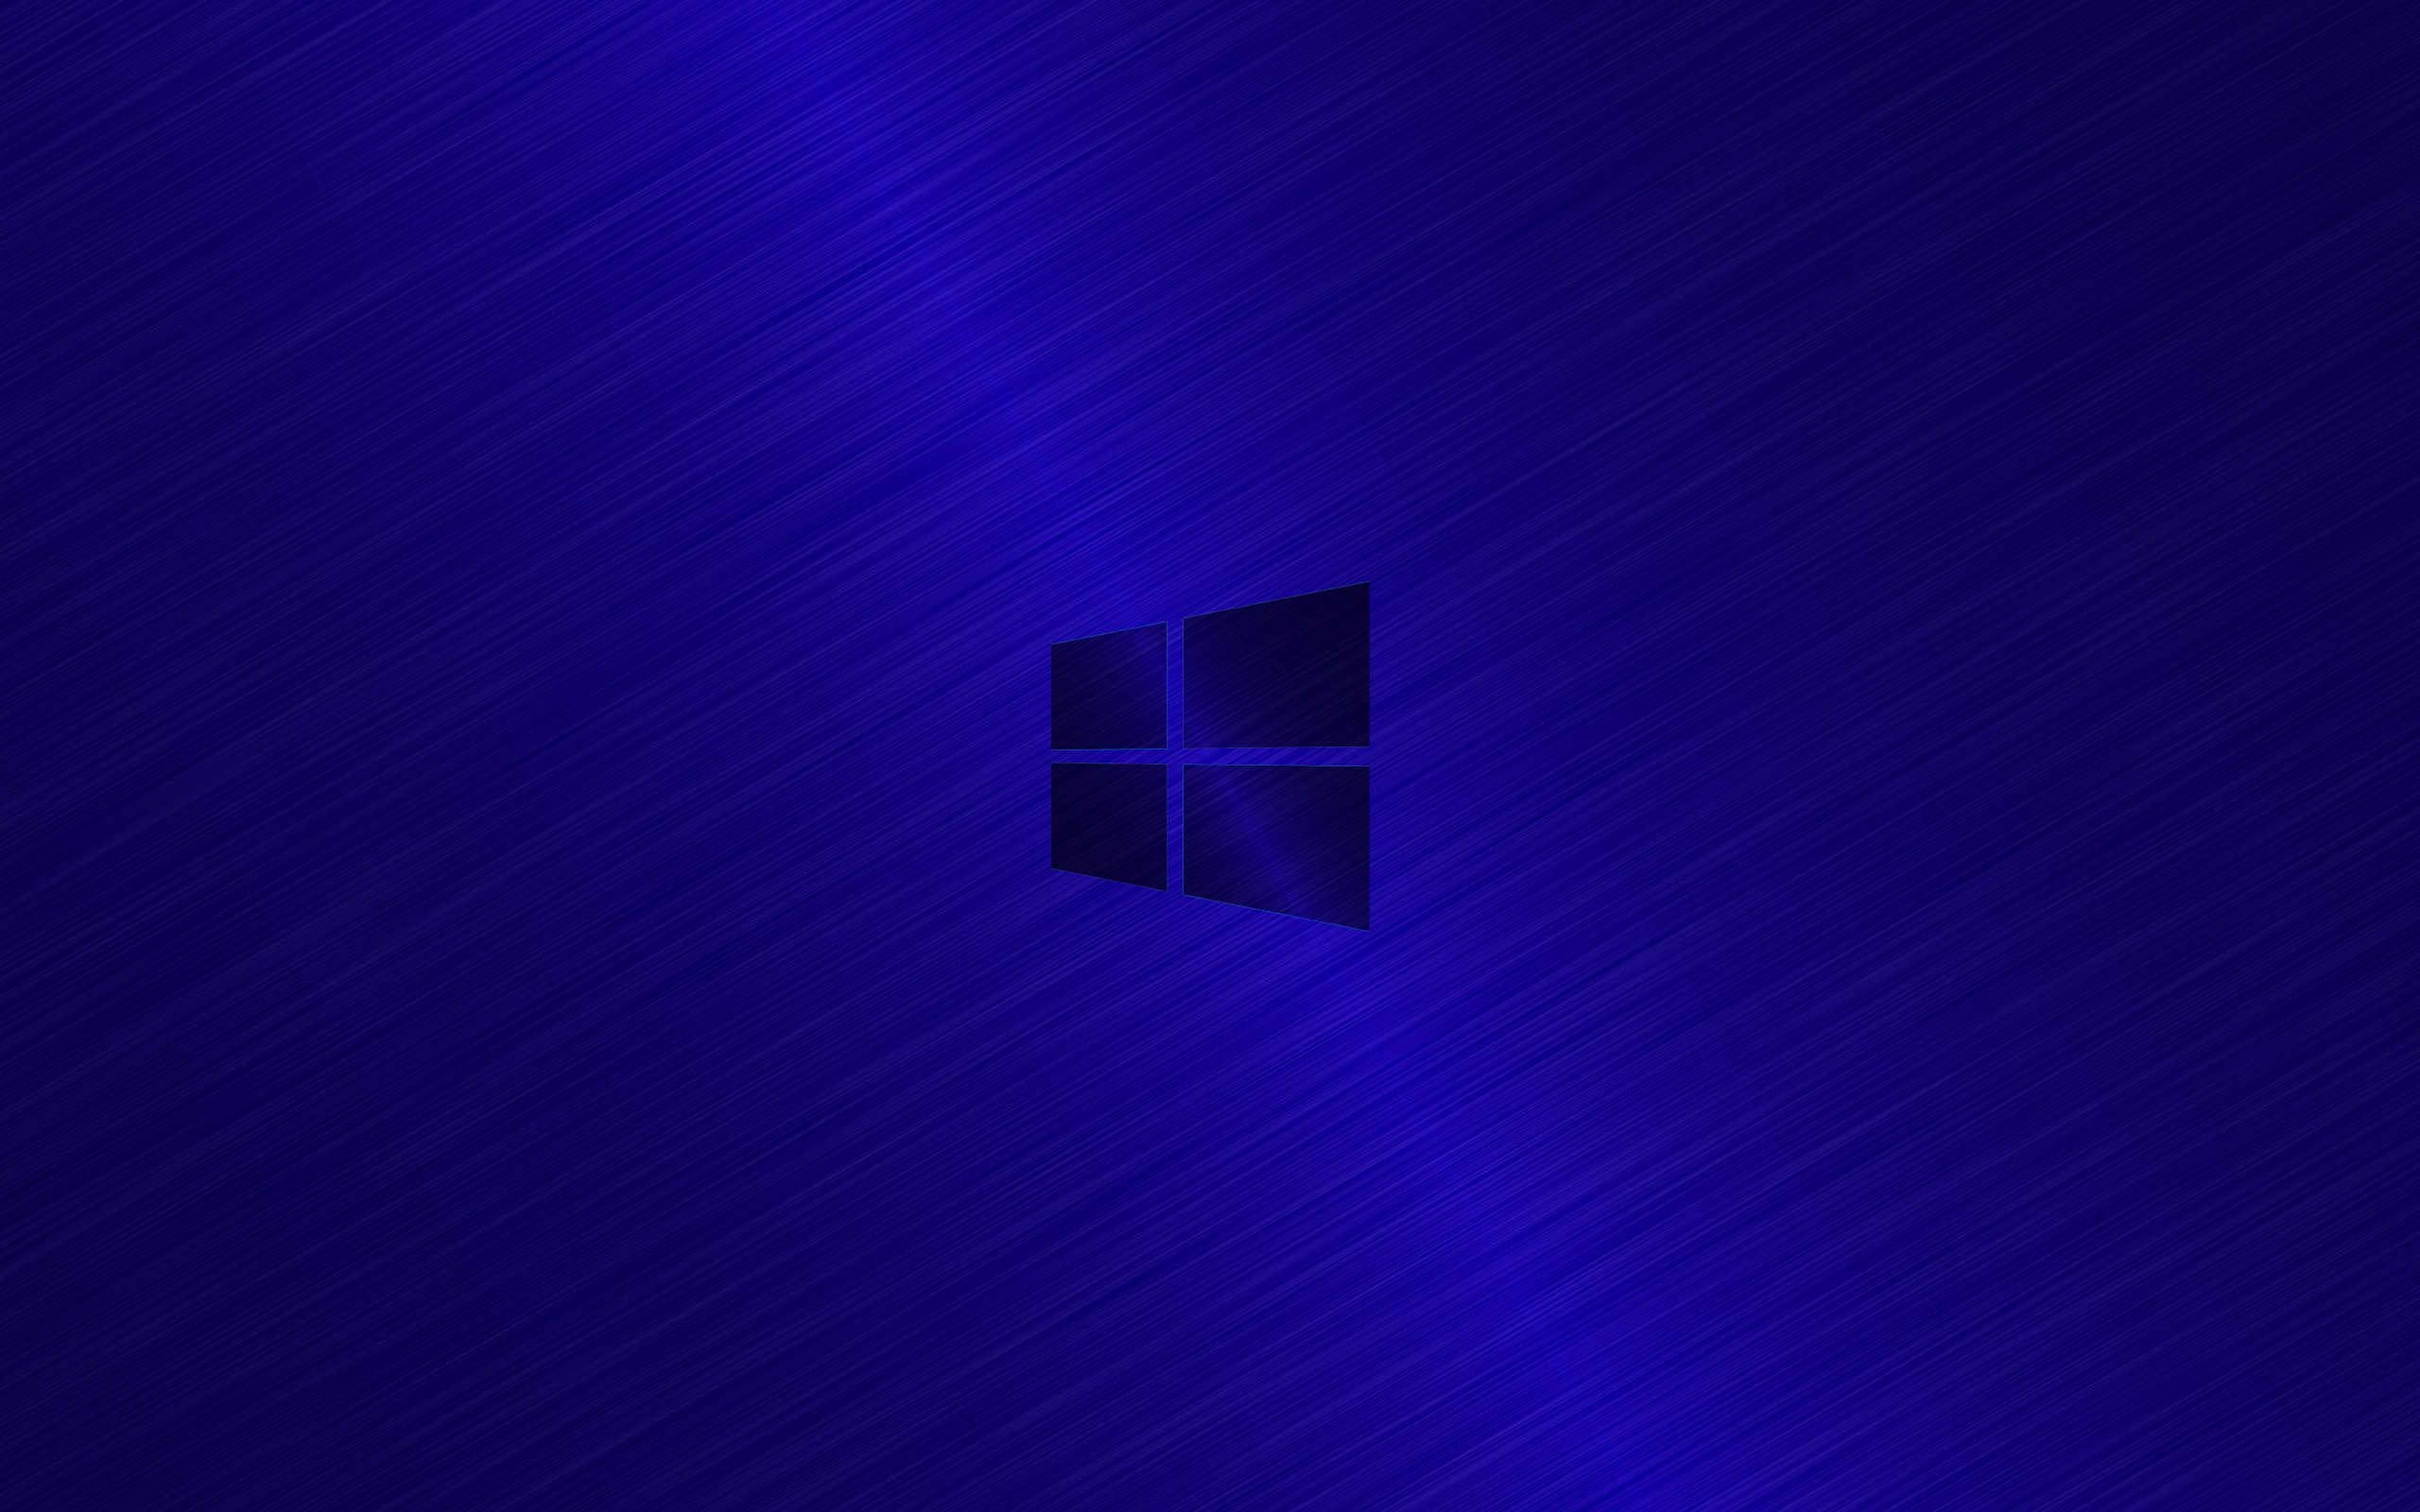 Windows 10 blue wallpaper 10 Background